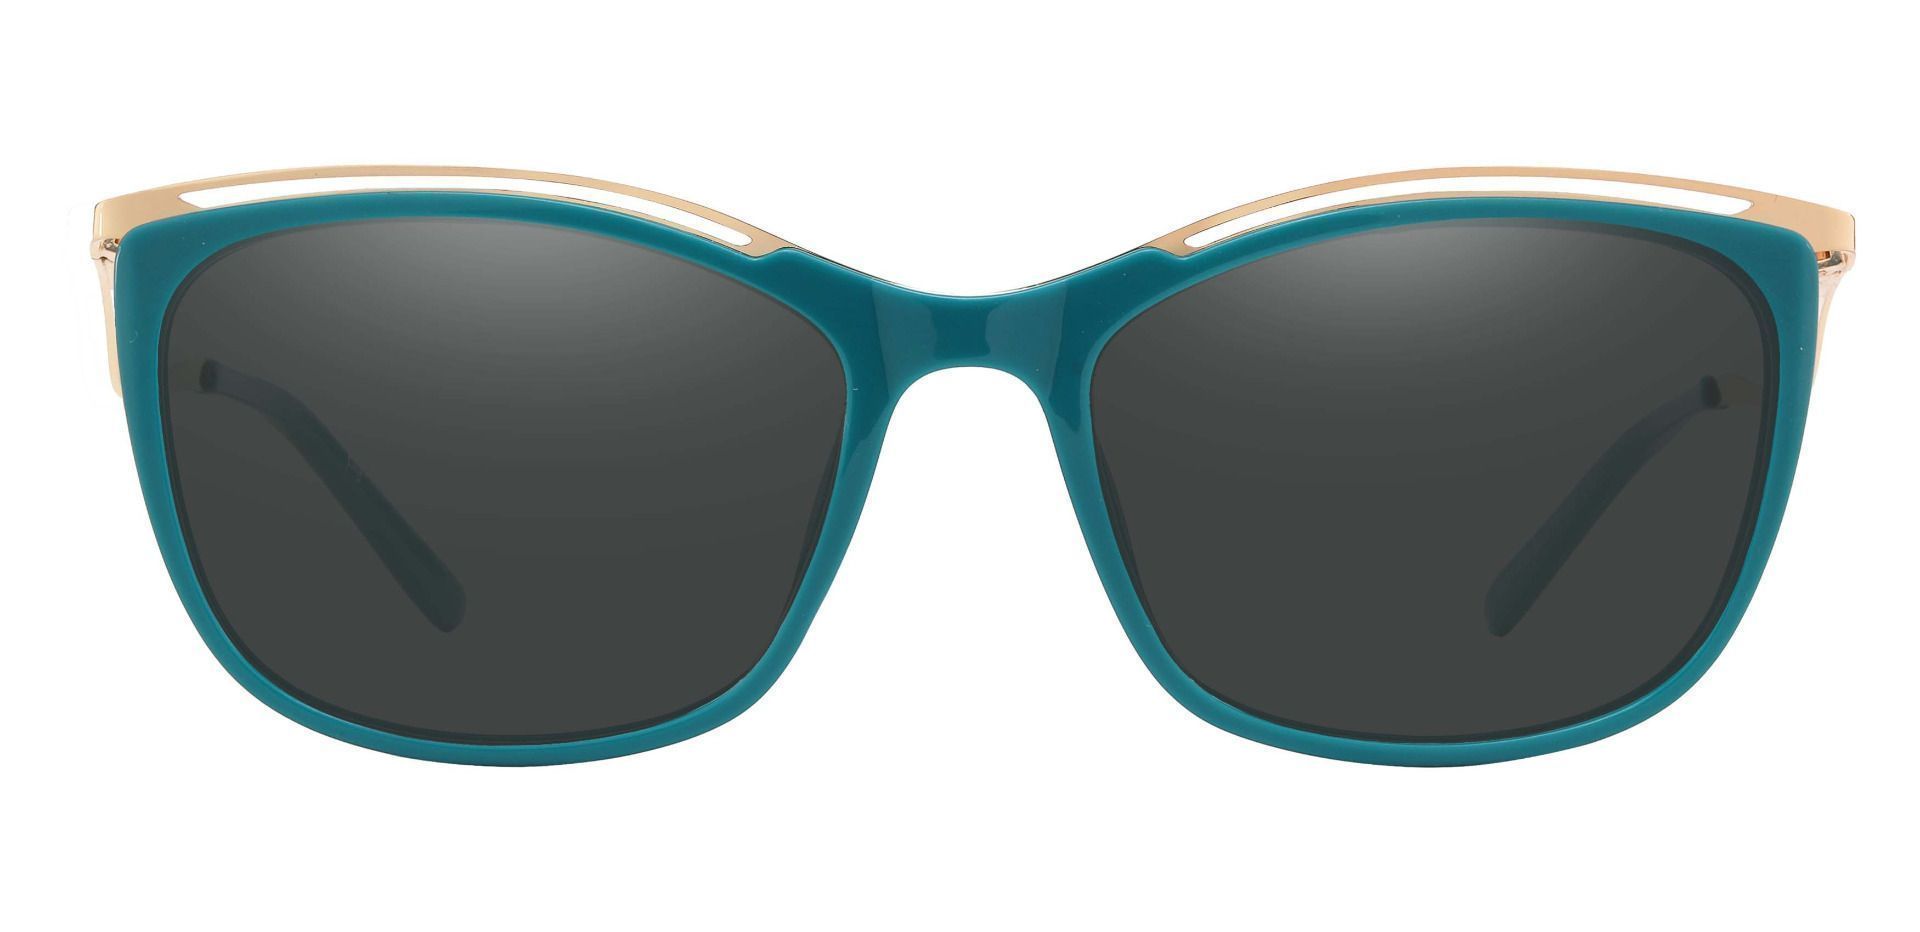 Enola Cat Eye Prescription Sunglasses - Green Frame With Gray Lenses